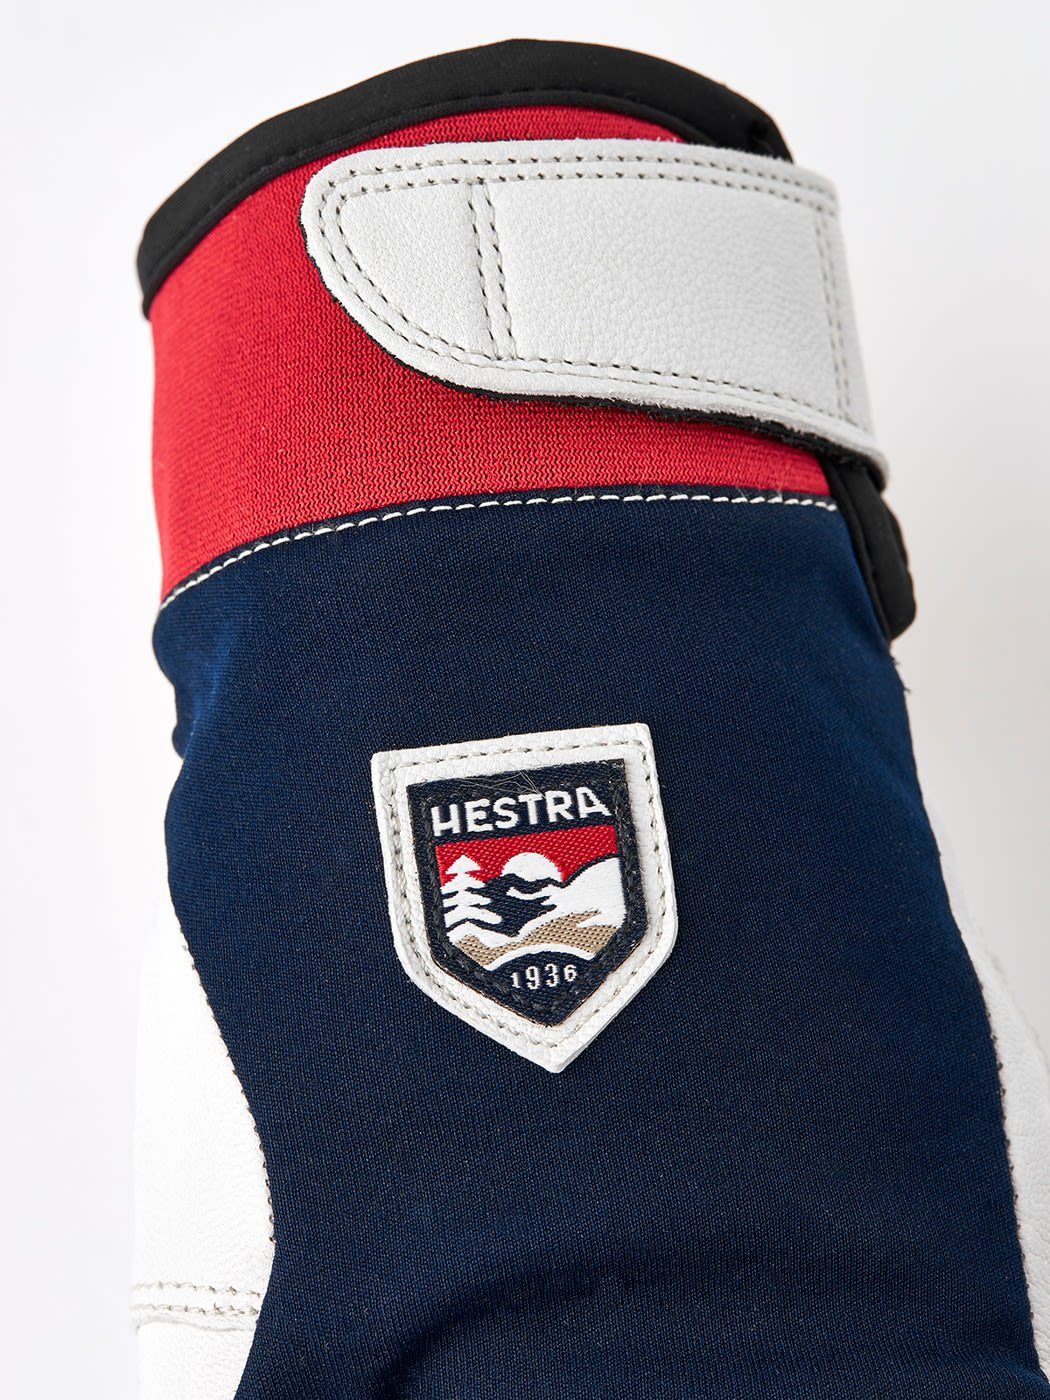 Hestra Fleecehandschuhe Ergo Navy - Offwhite Grip Accessoires Hestra Active